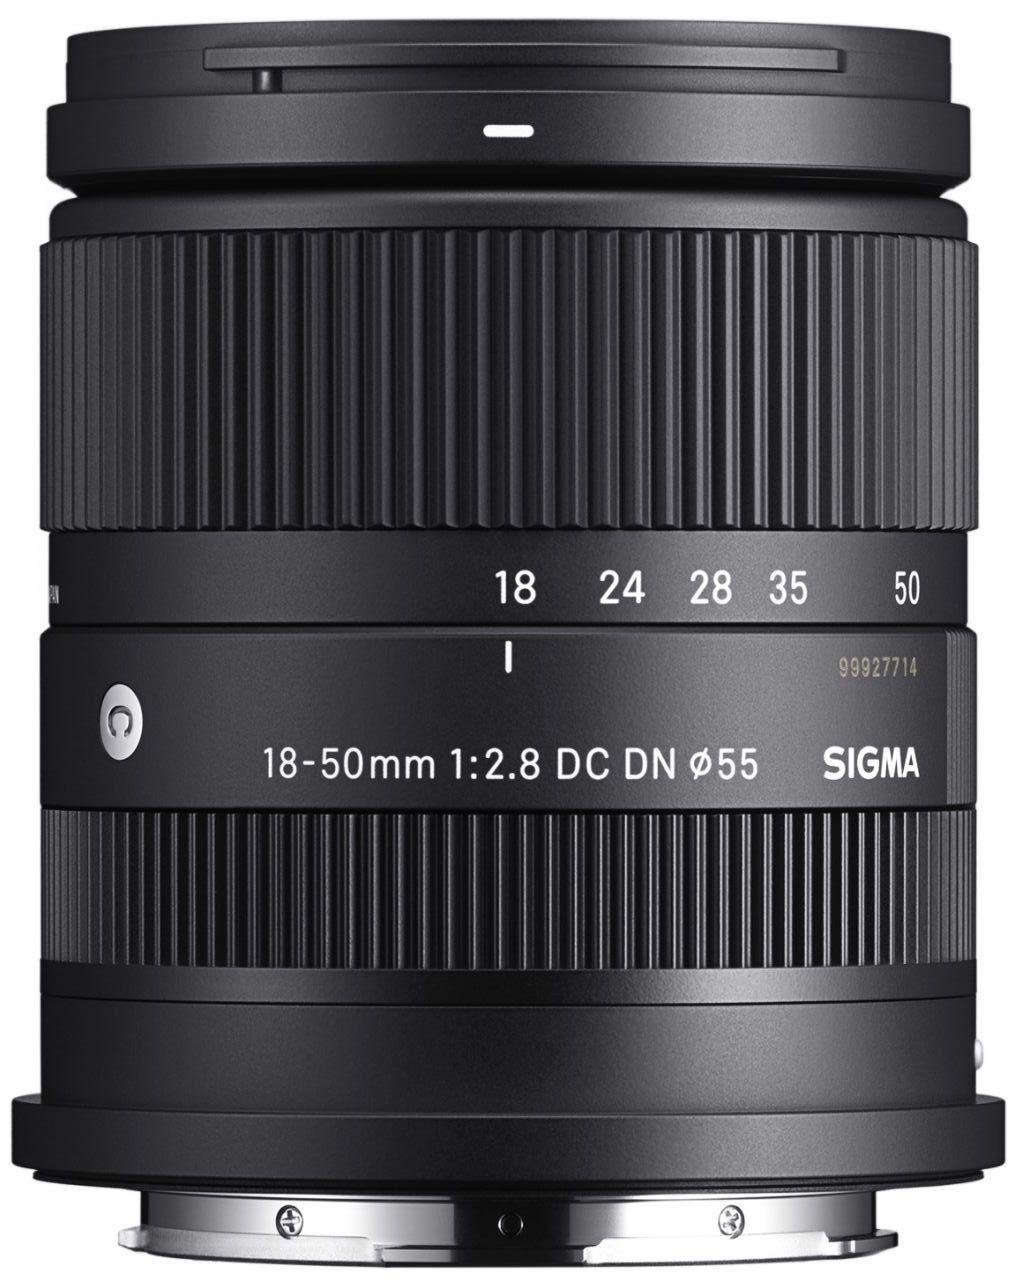 DC DN für (C) 18-50mm Objektiv f2,8 Sony-E SIGMA